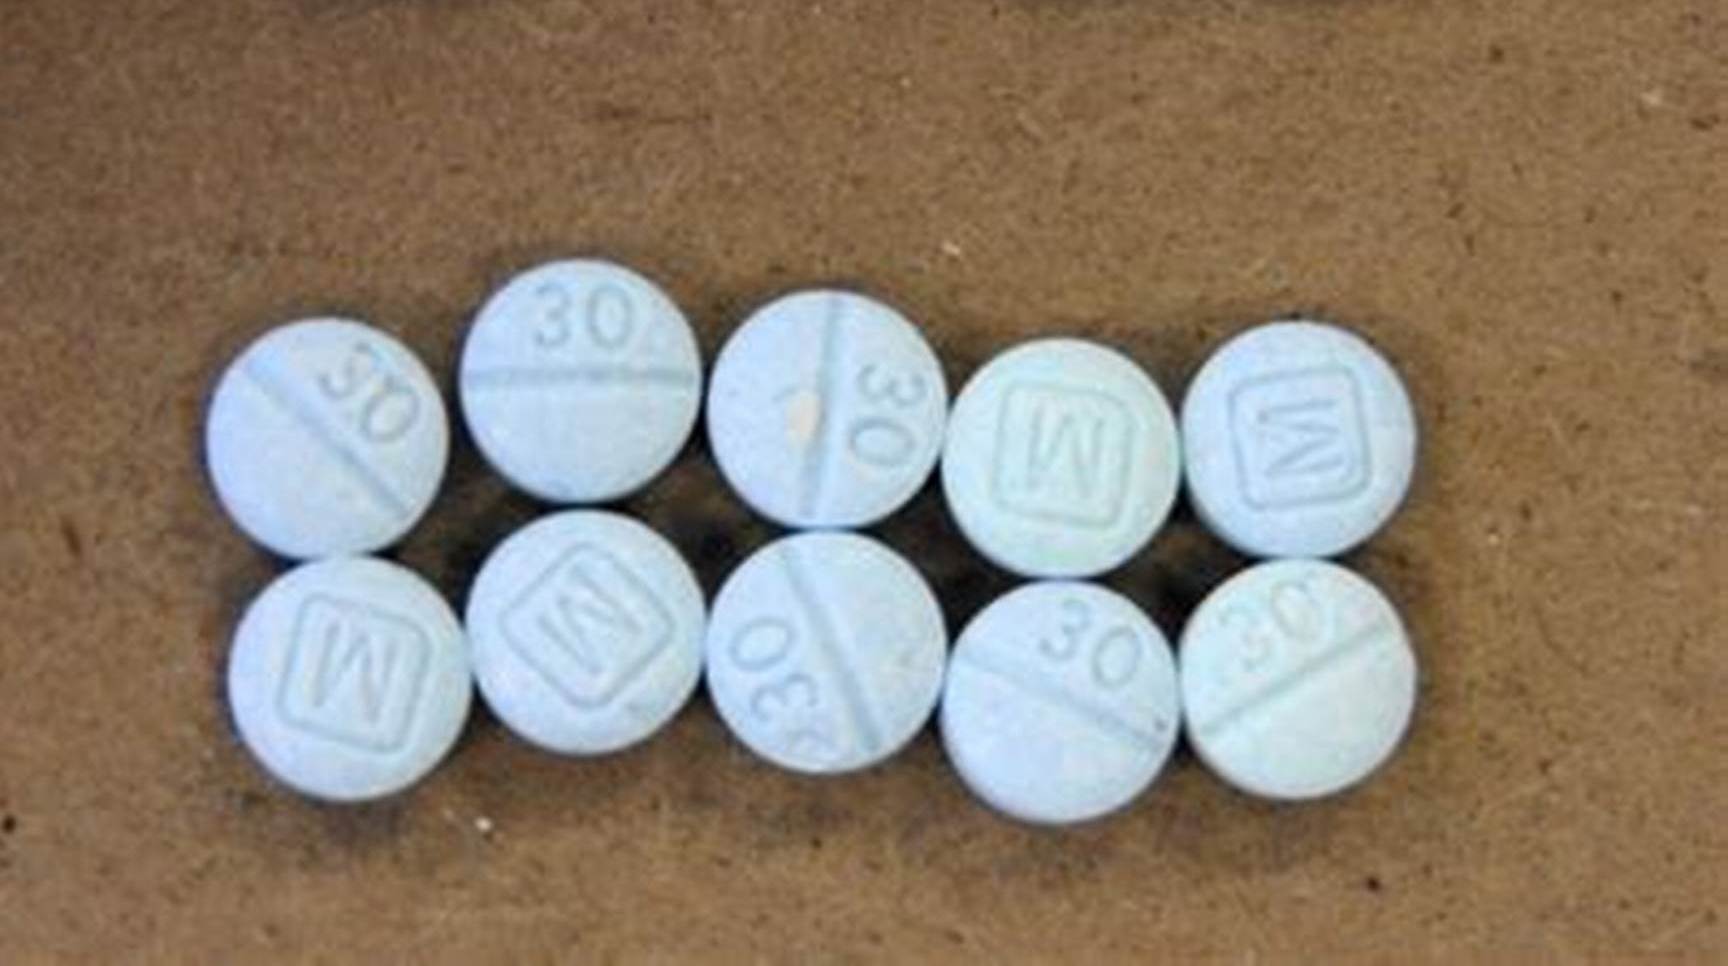 Dangerous drugs: PANT investigating Fentanyl tablets, pills circulating